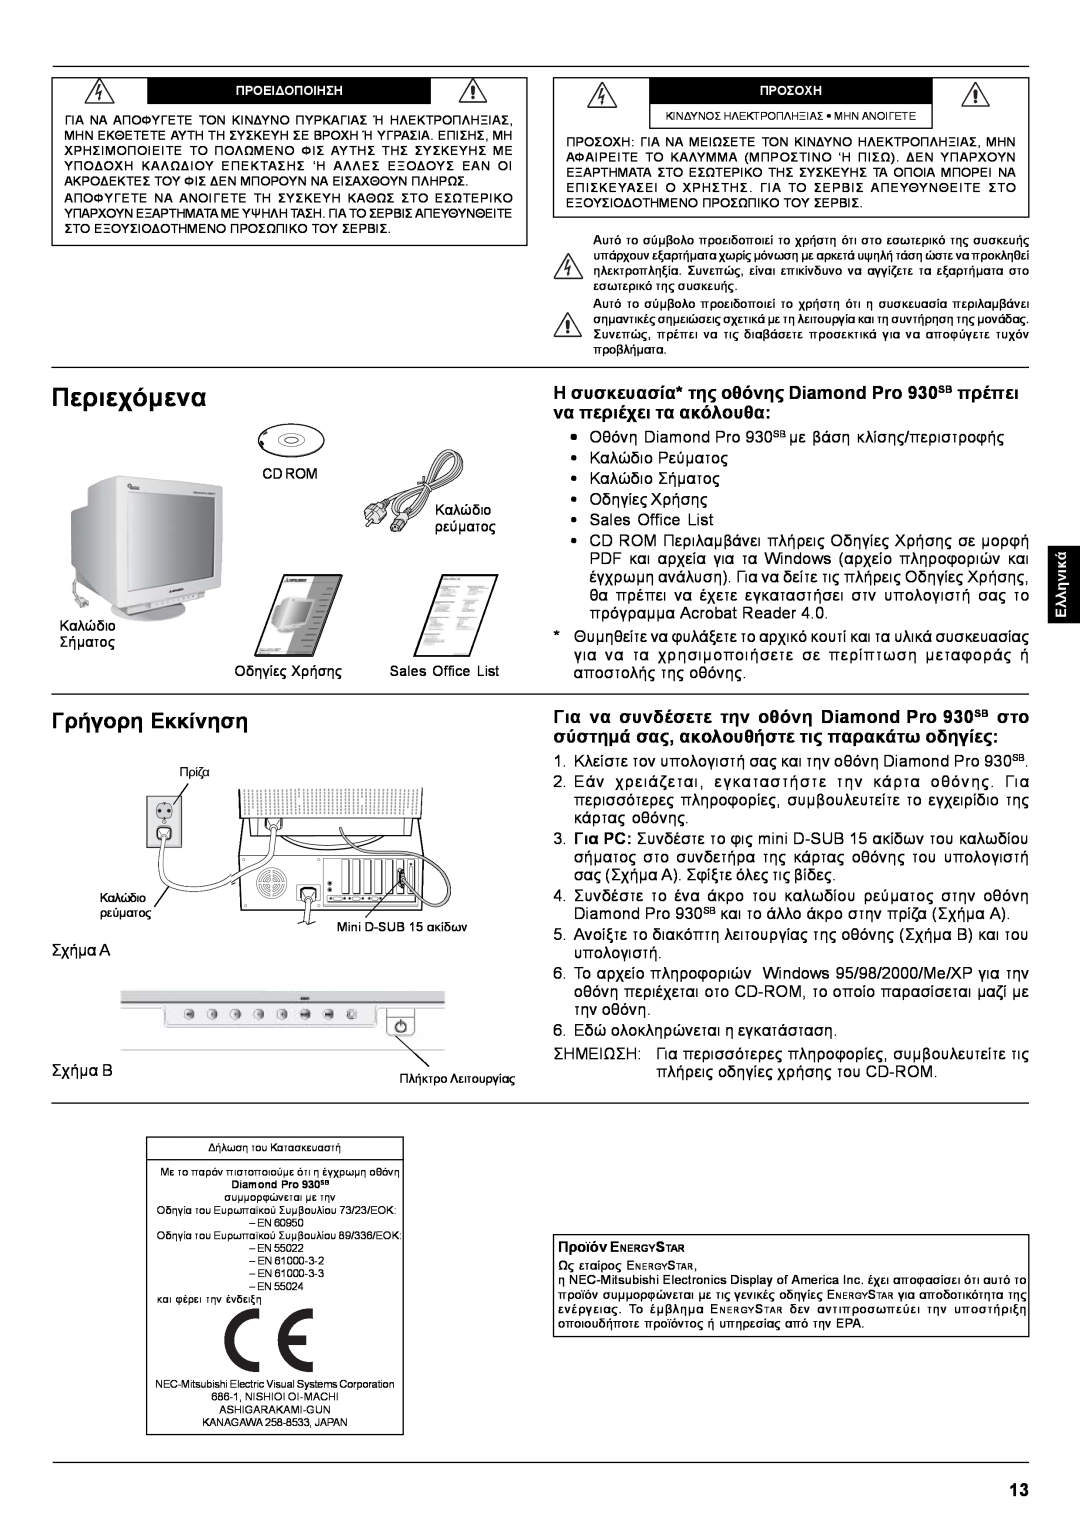 Mitsubishi Electronics Pro 930SB user manual Γρήγορη Εκκίνηση, Περιεχόµενα 